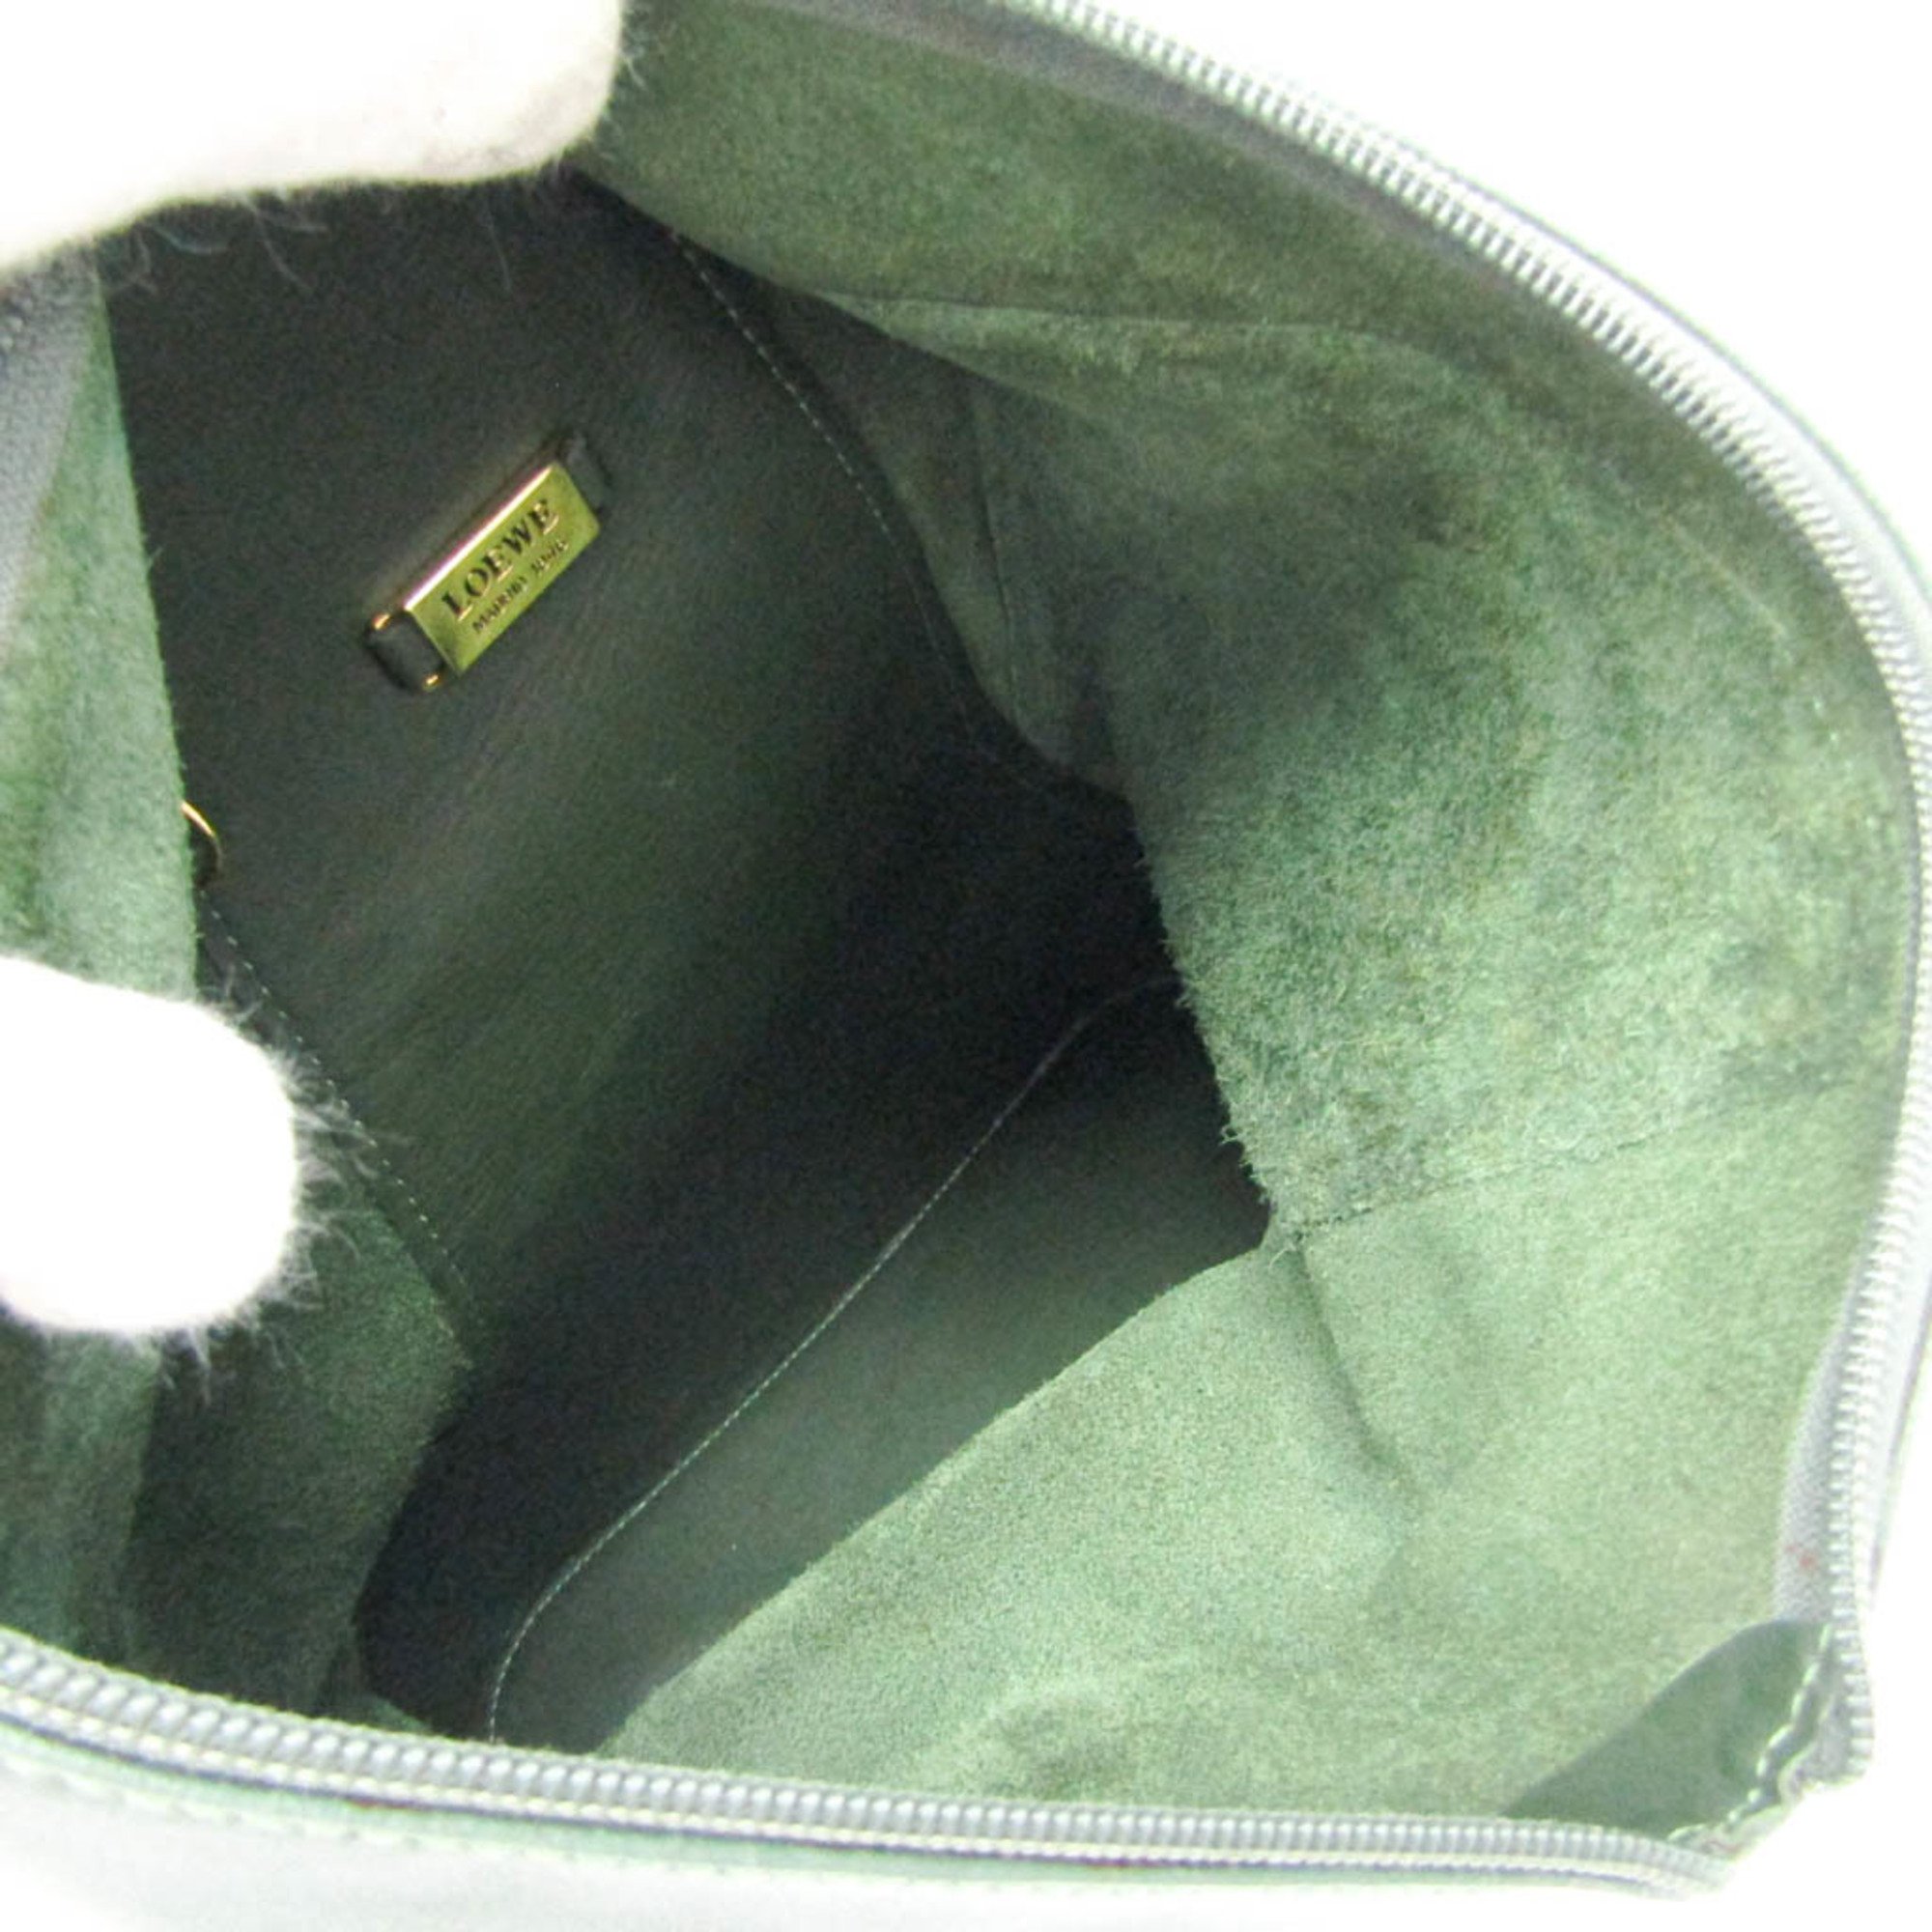 Loewe Anton Women's Leather Shoulder Bag Dark Green